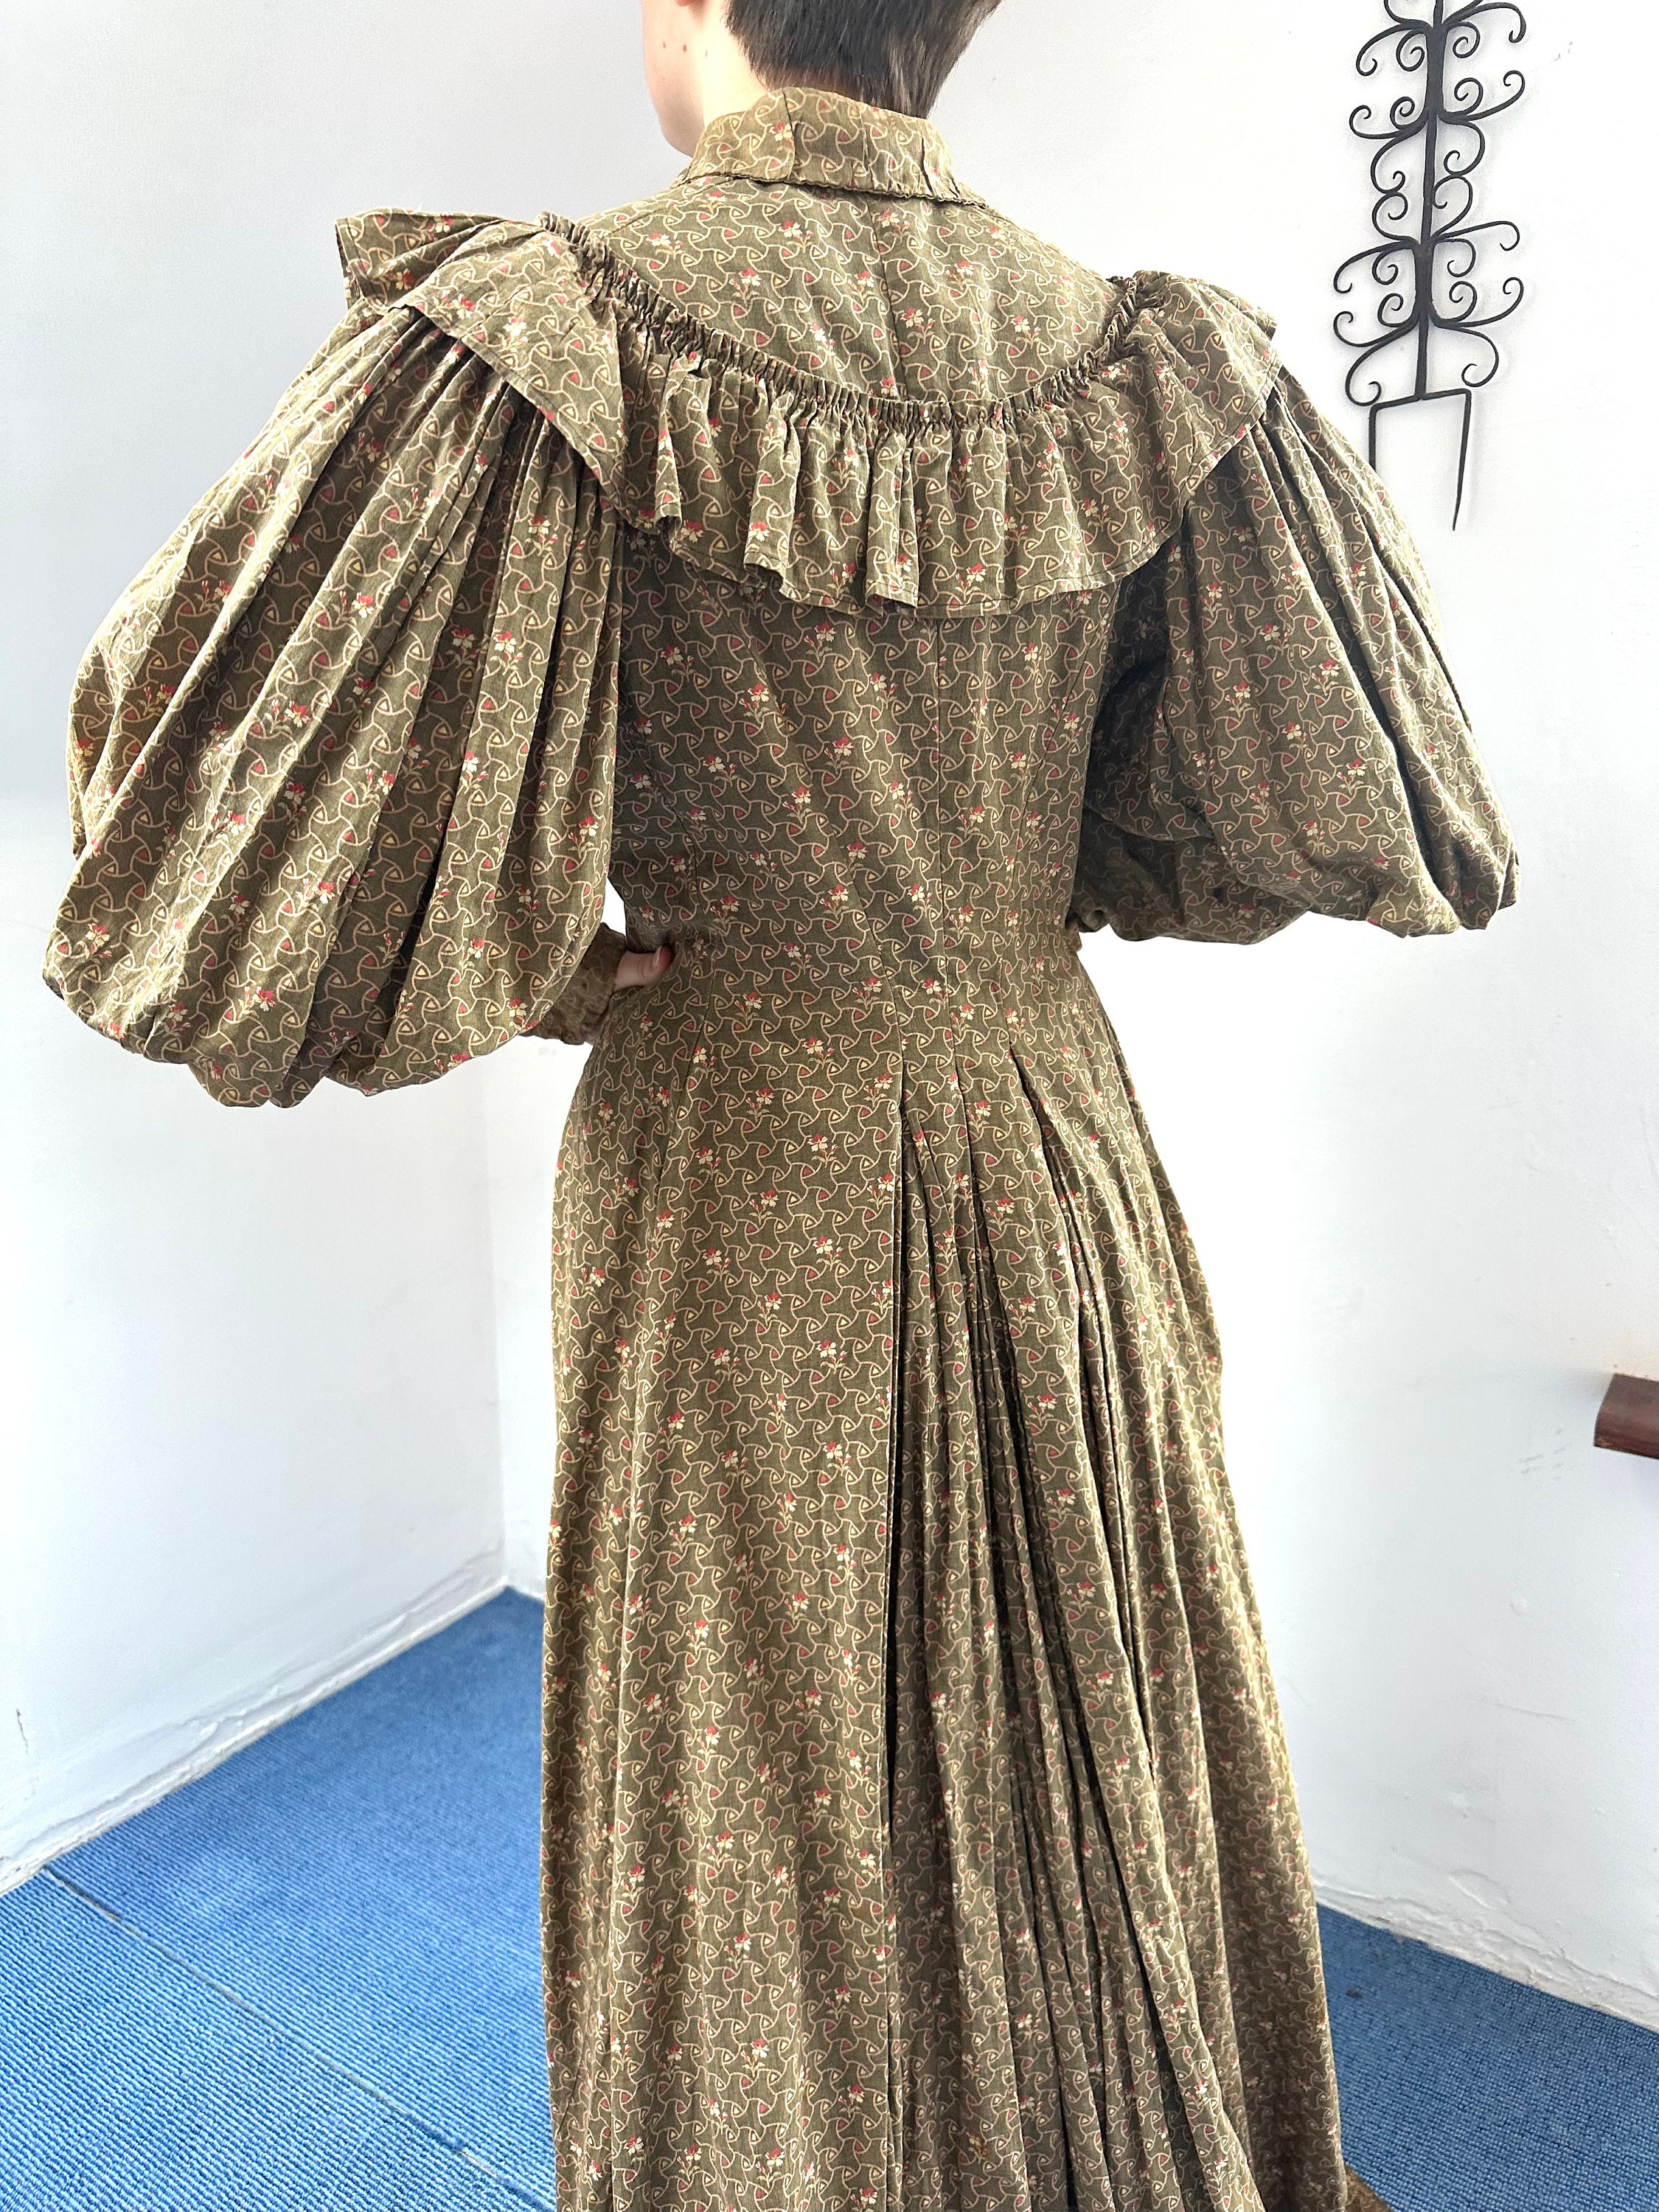 1890s~1900s Antique Calico Prairie Dress